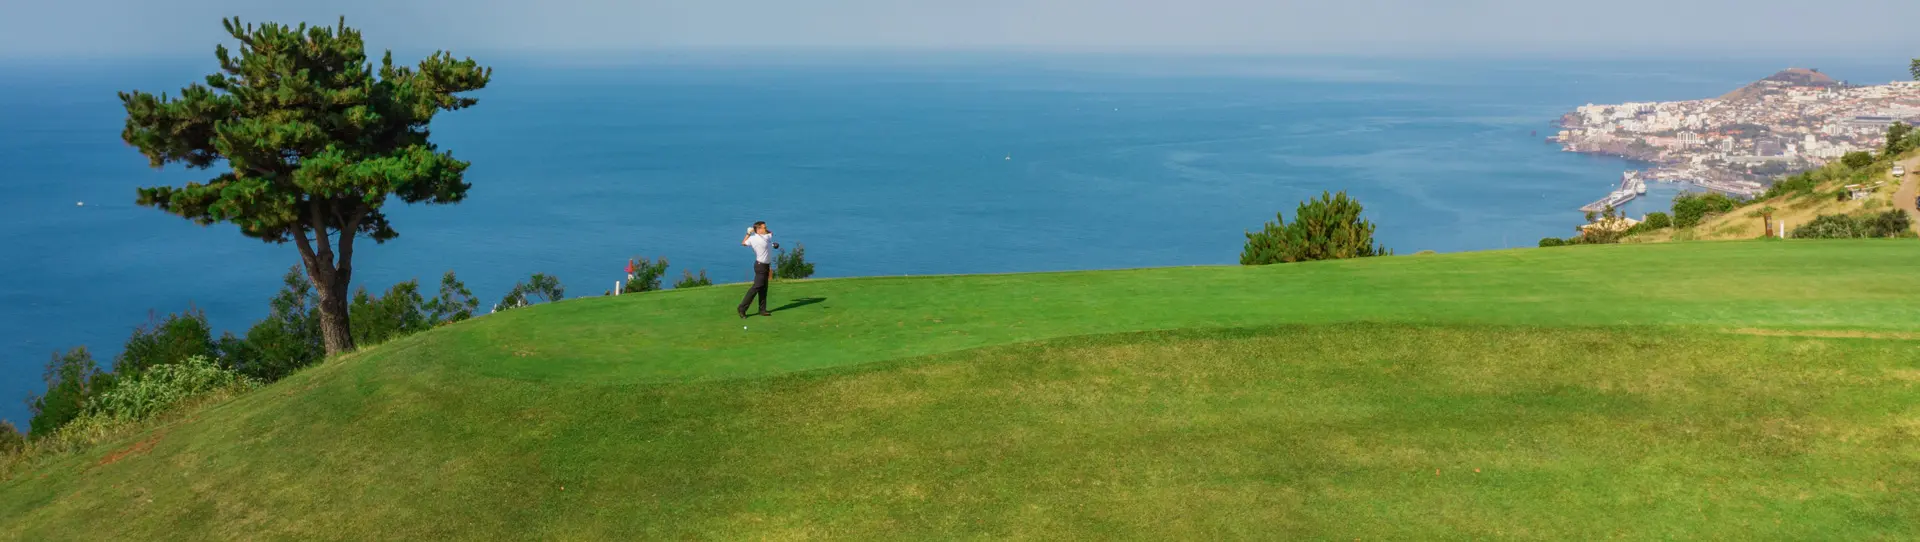 Portugal golf holidays - Madeira Golf Passport 5 Rounds - Photo 3